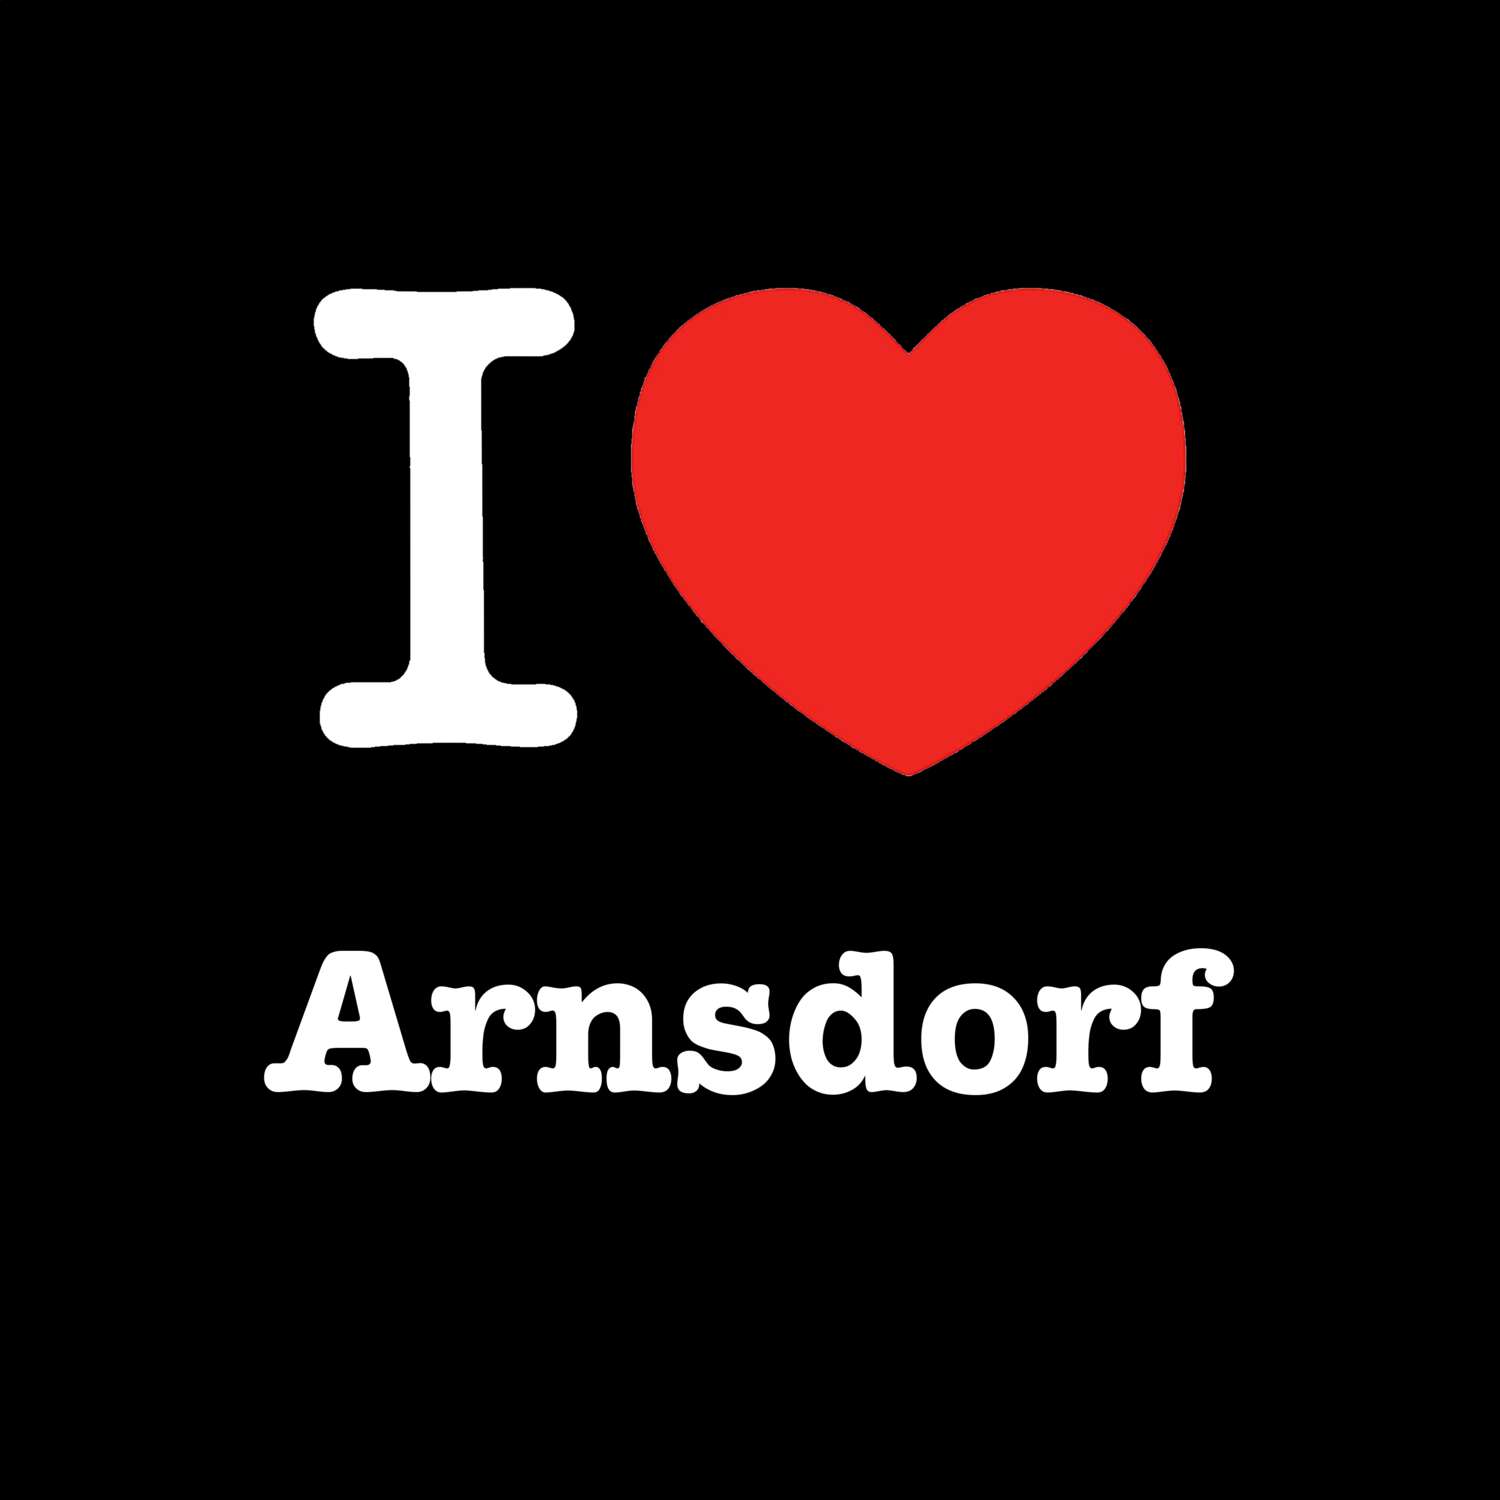 Arnsdorf T-Shirt »I love«